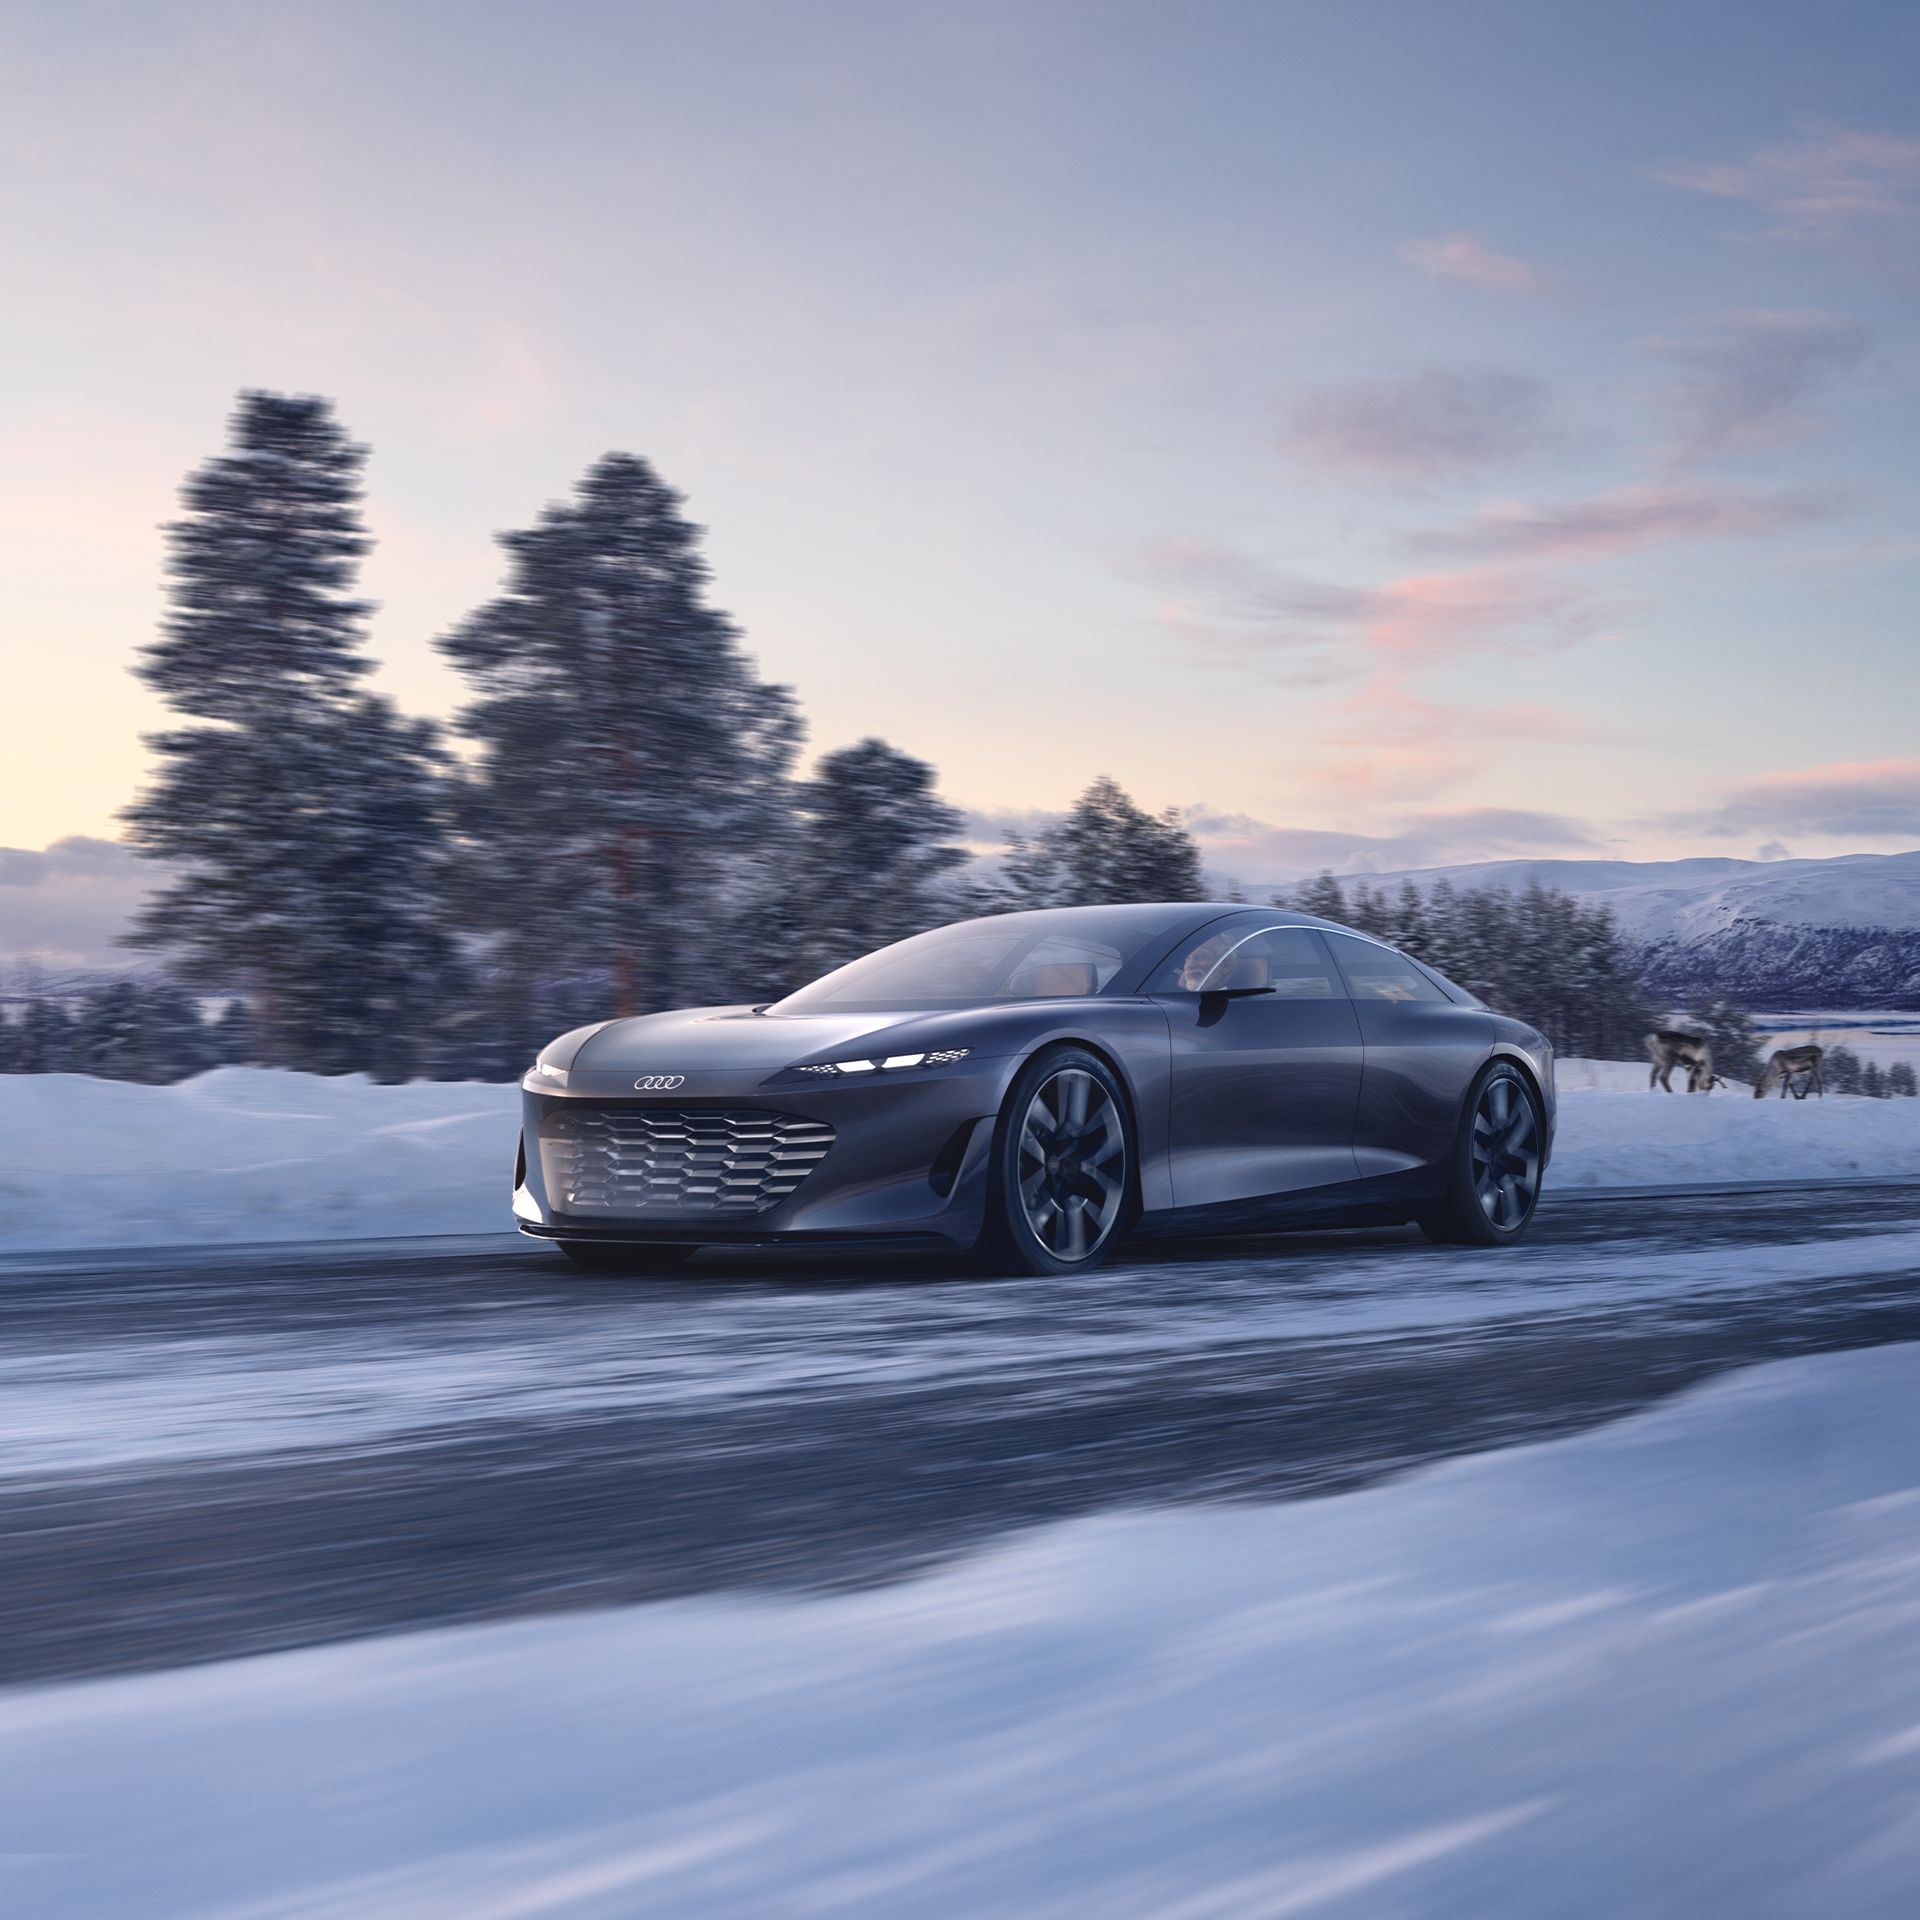 El Audi grandsphere concept en una carretera cubierta de nieve.